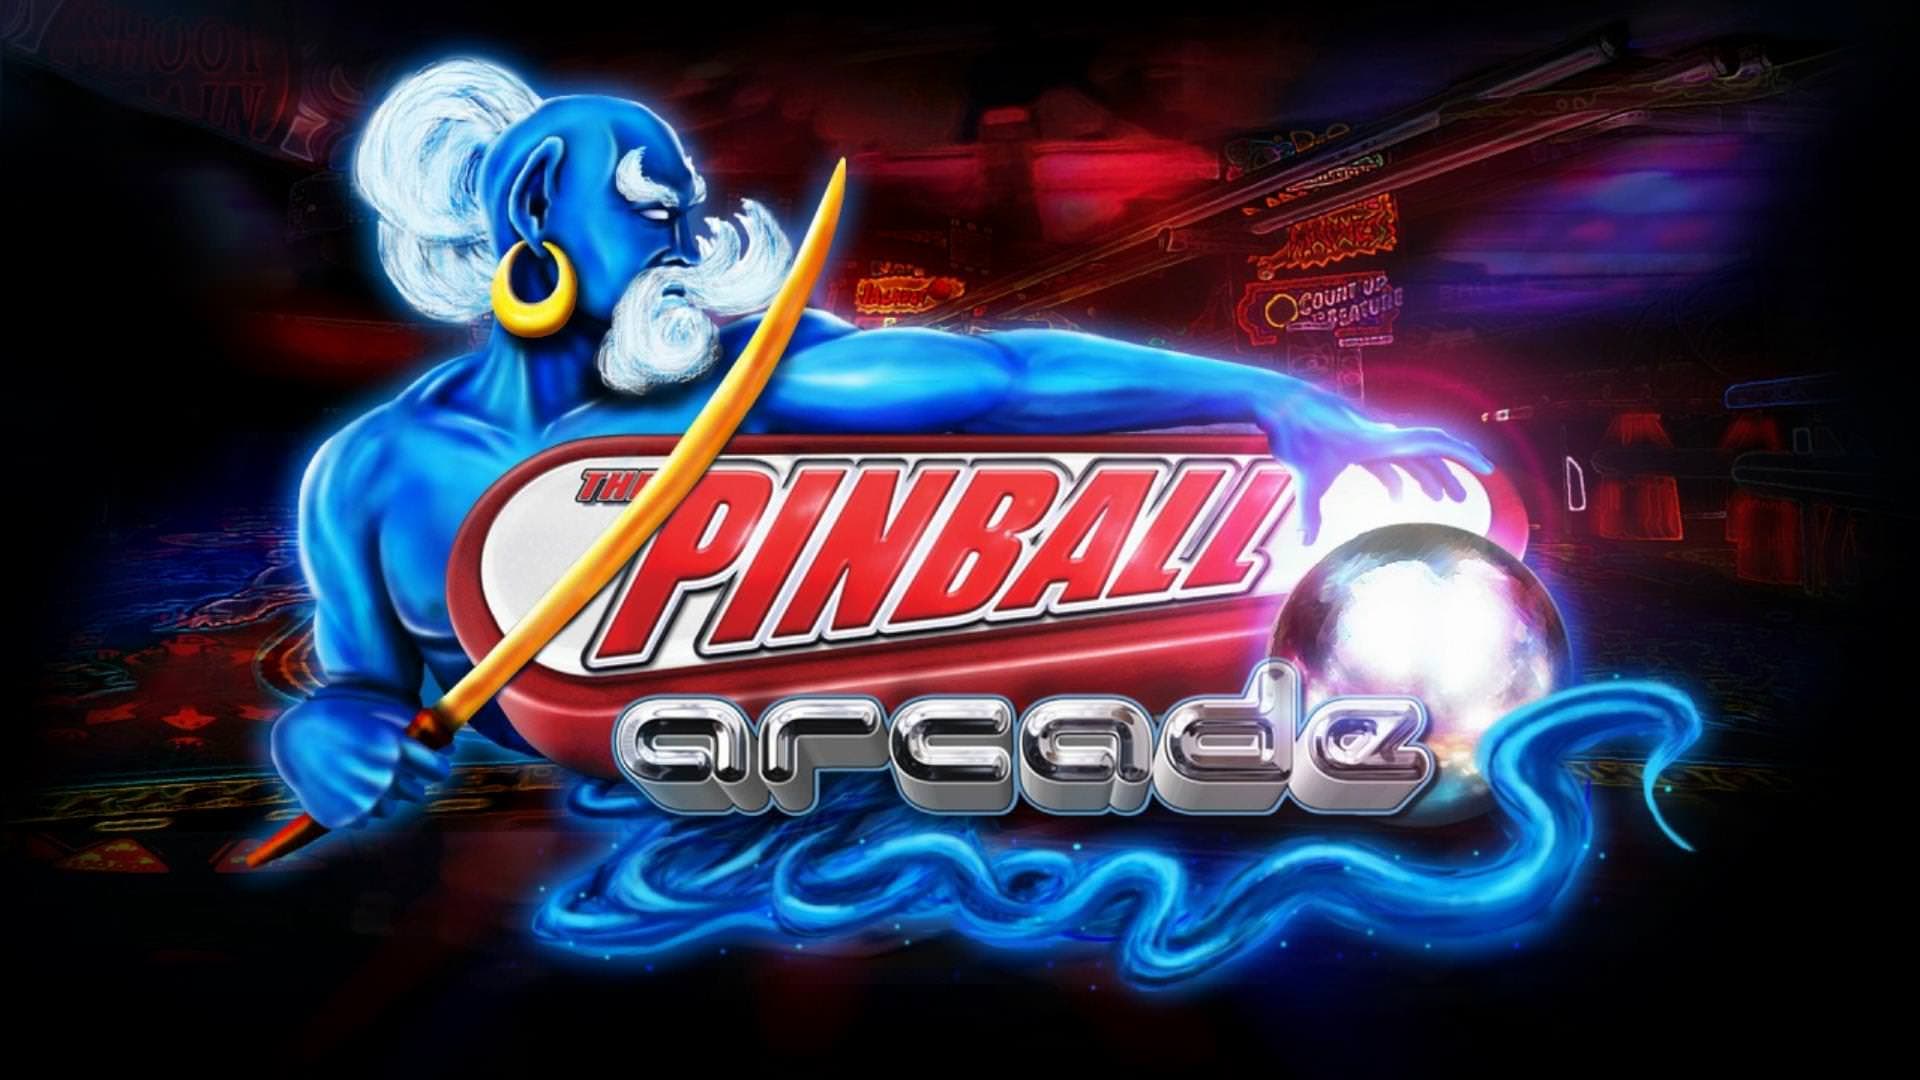 [Act.] The Pinball Arcade llegará mañana a la eShop americana de Switch